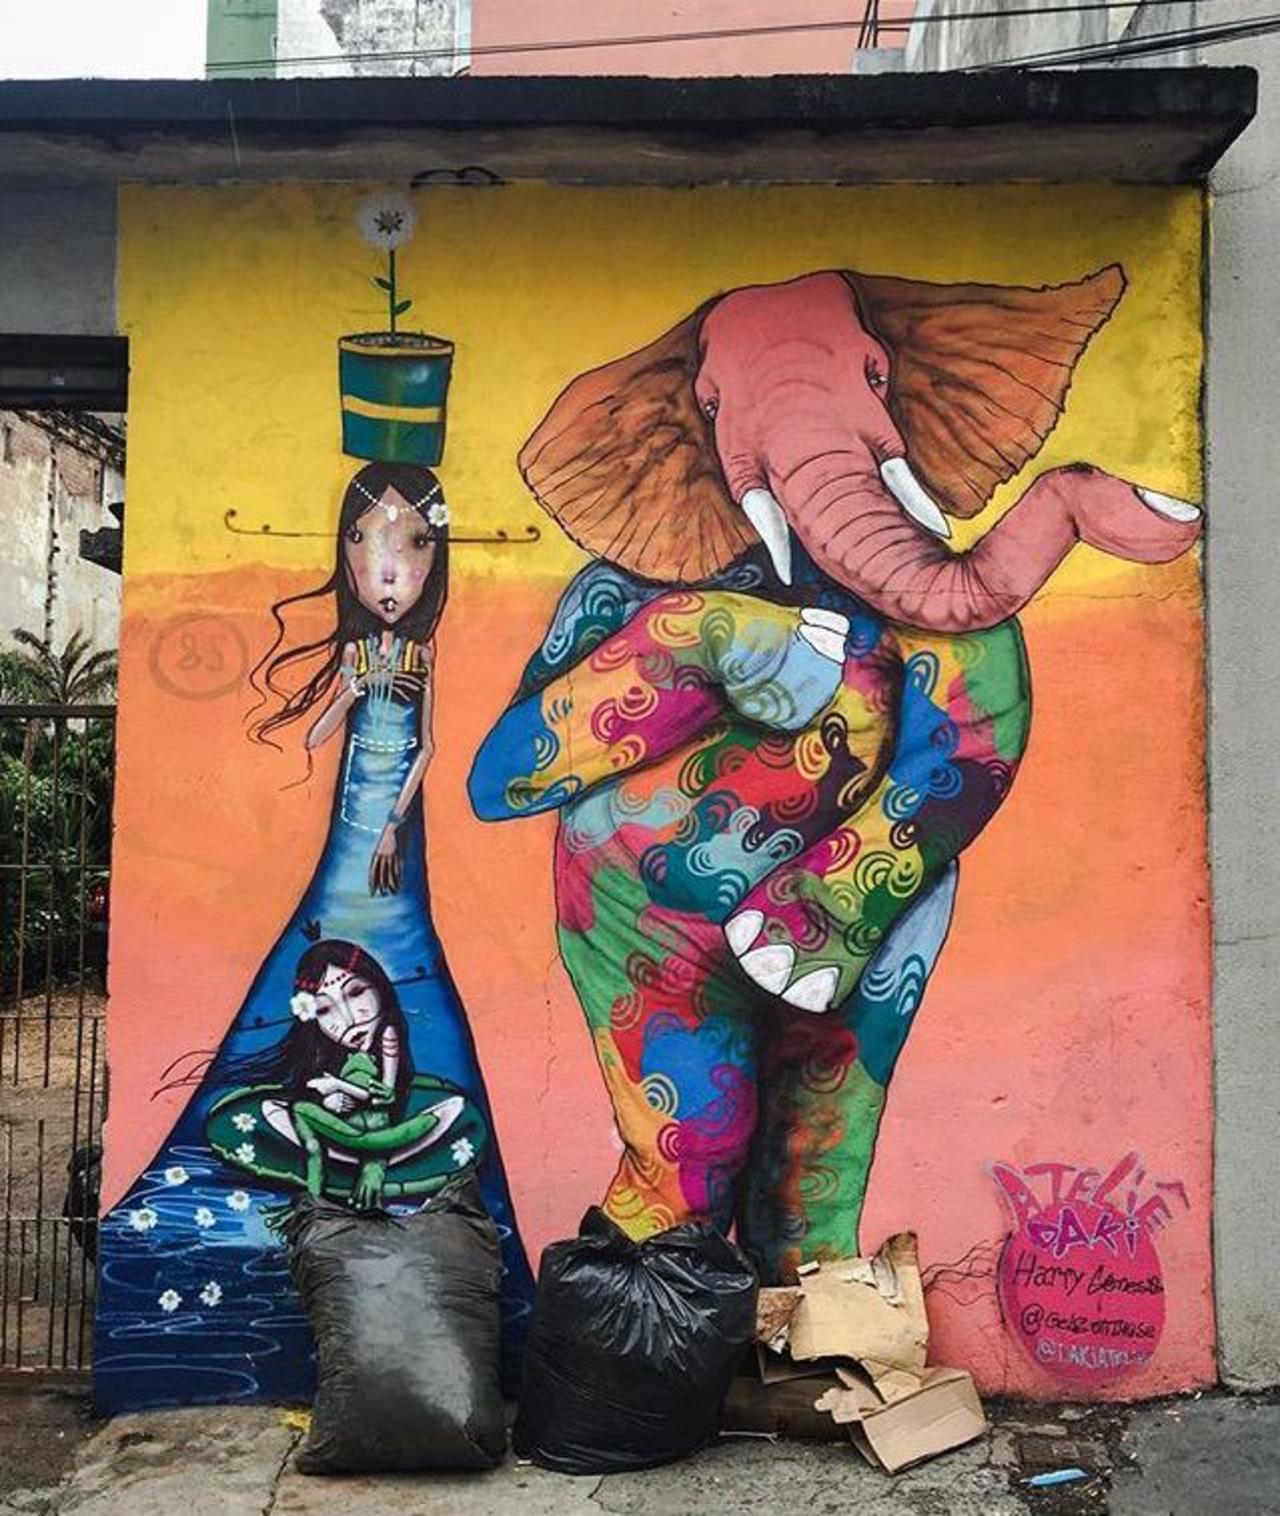 Street Art by Harry Geneis & Gelson in São Paulo #art #mural #graffiti #streetart http://t.co/SlLbhuMZfD … … … …… http://twitter.com/charlesjackso14/status/648021541255516160